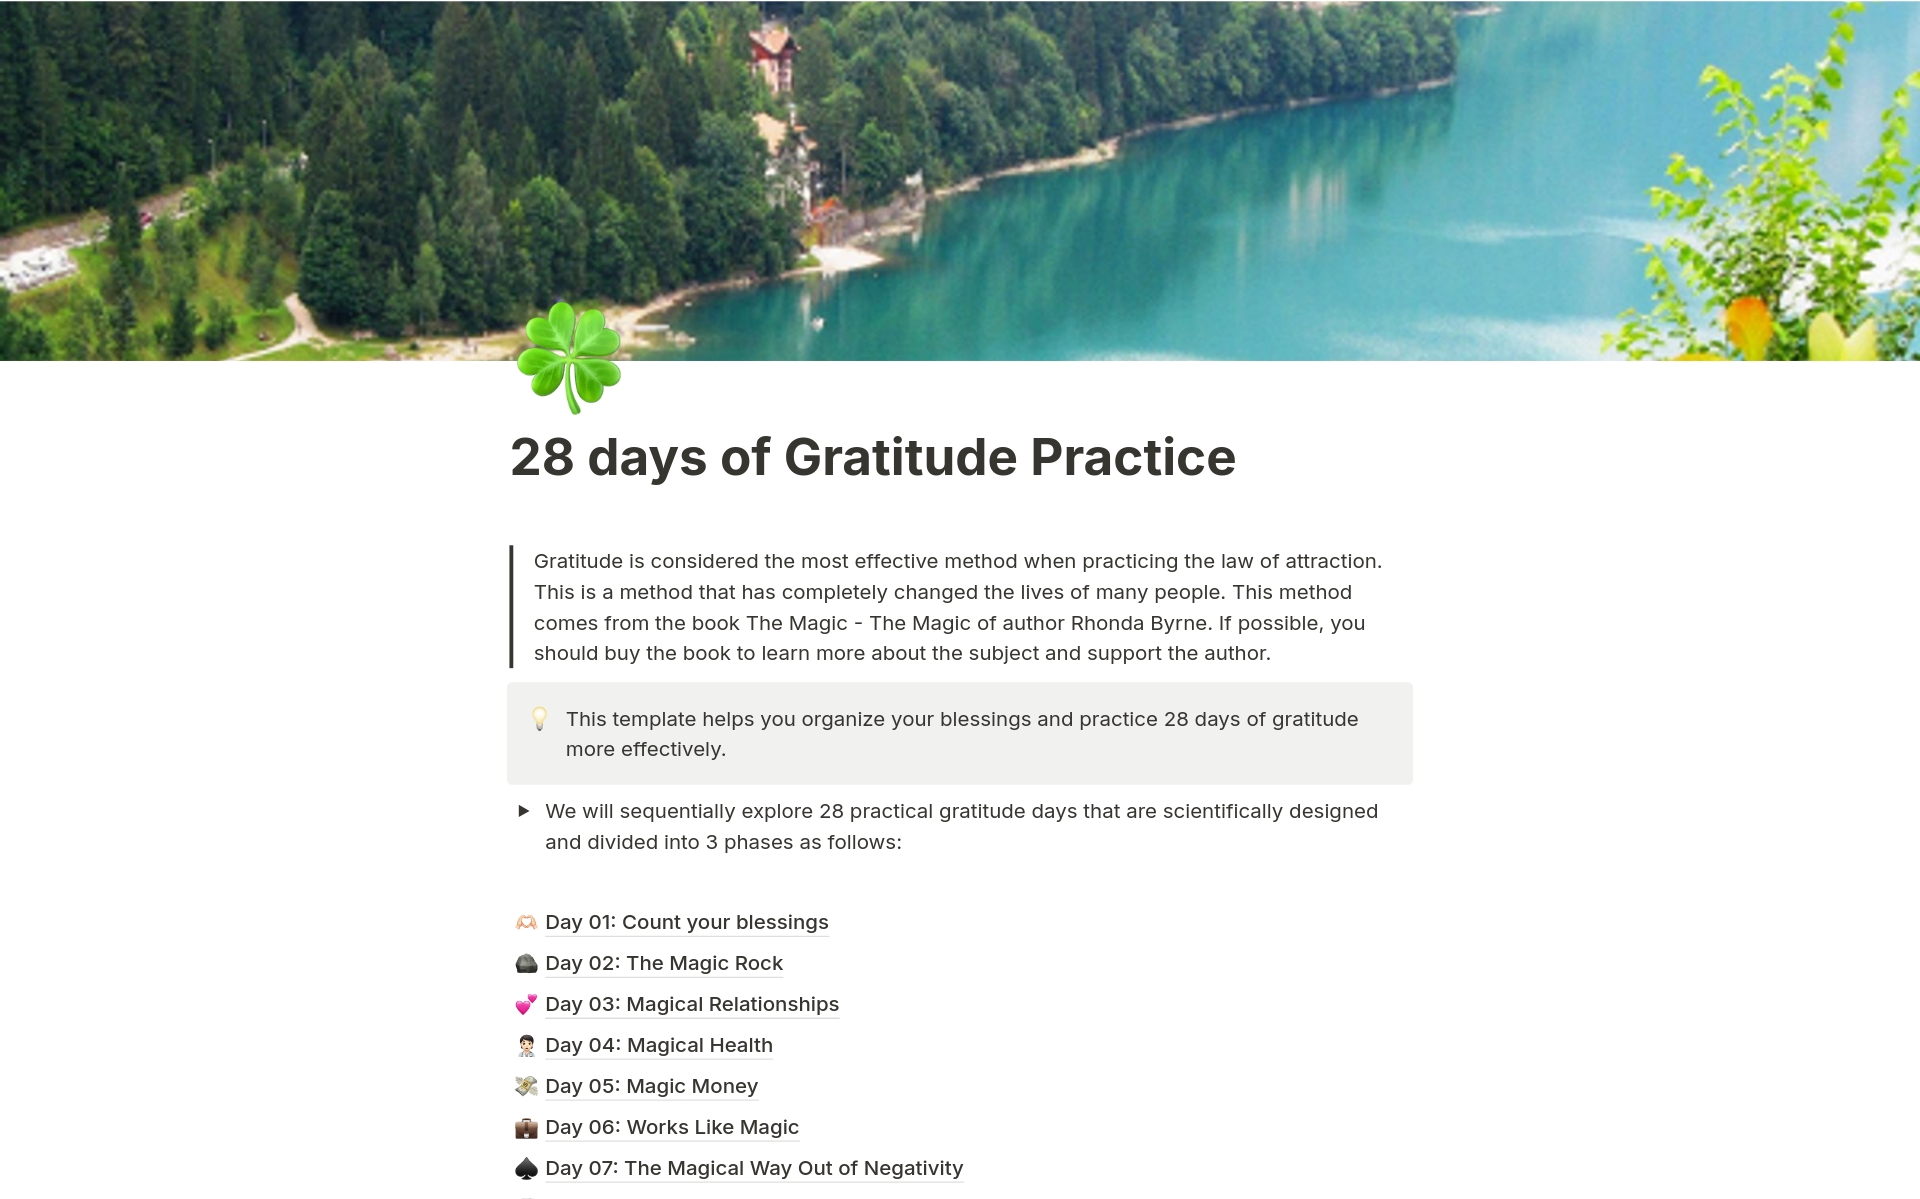 Vista previa de plantilla para 28 days of Gratitude Practice